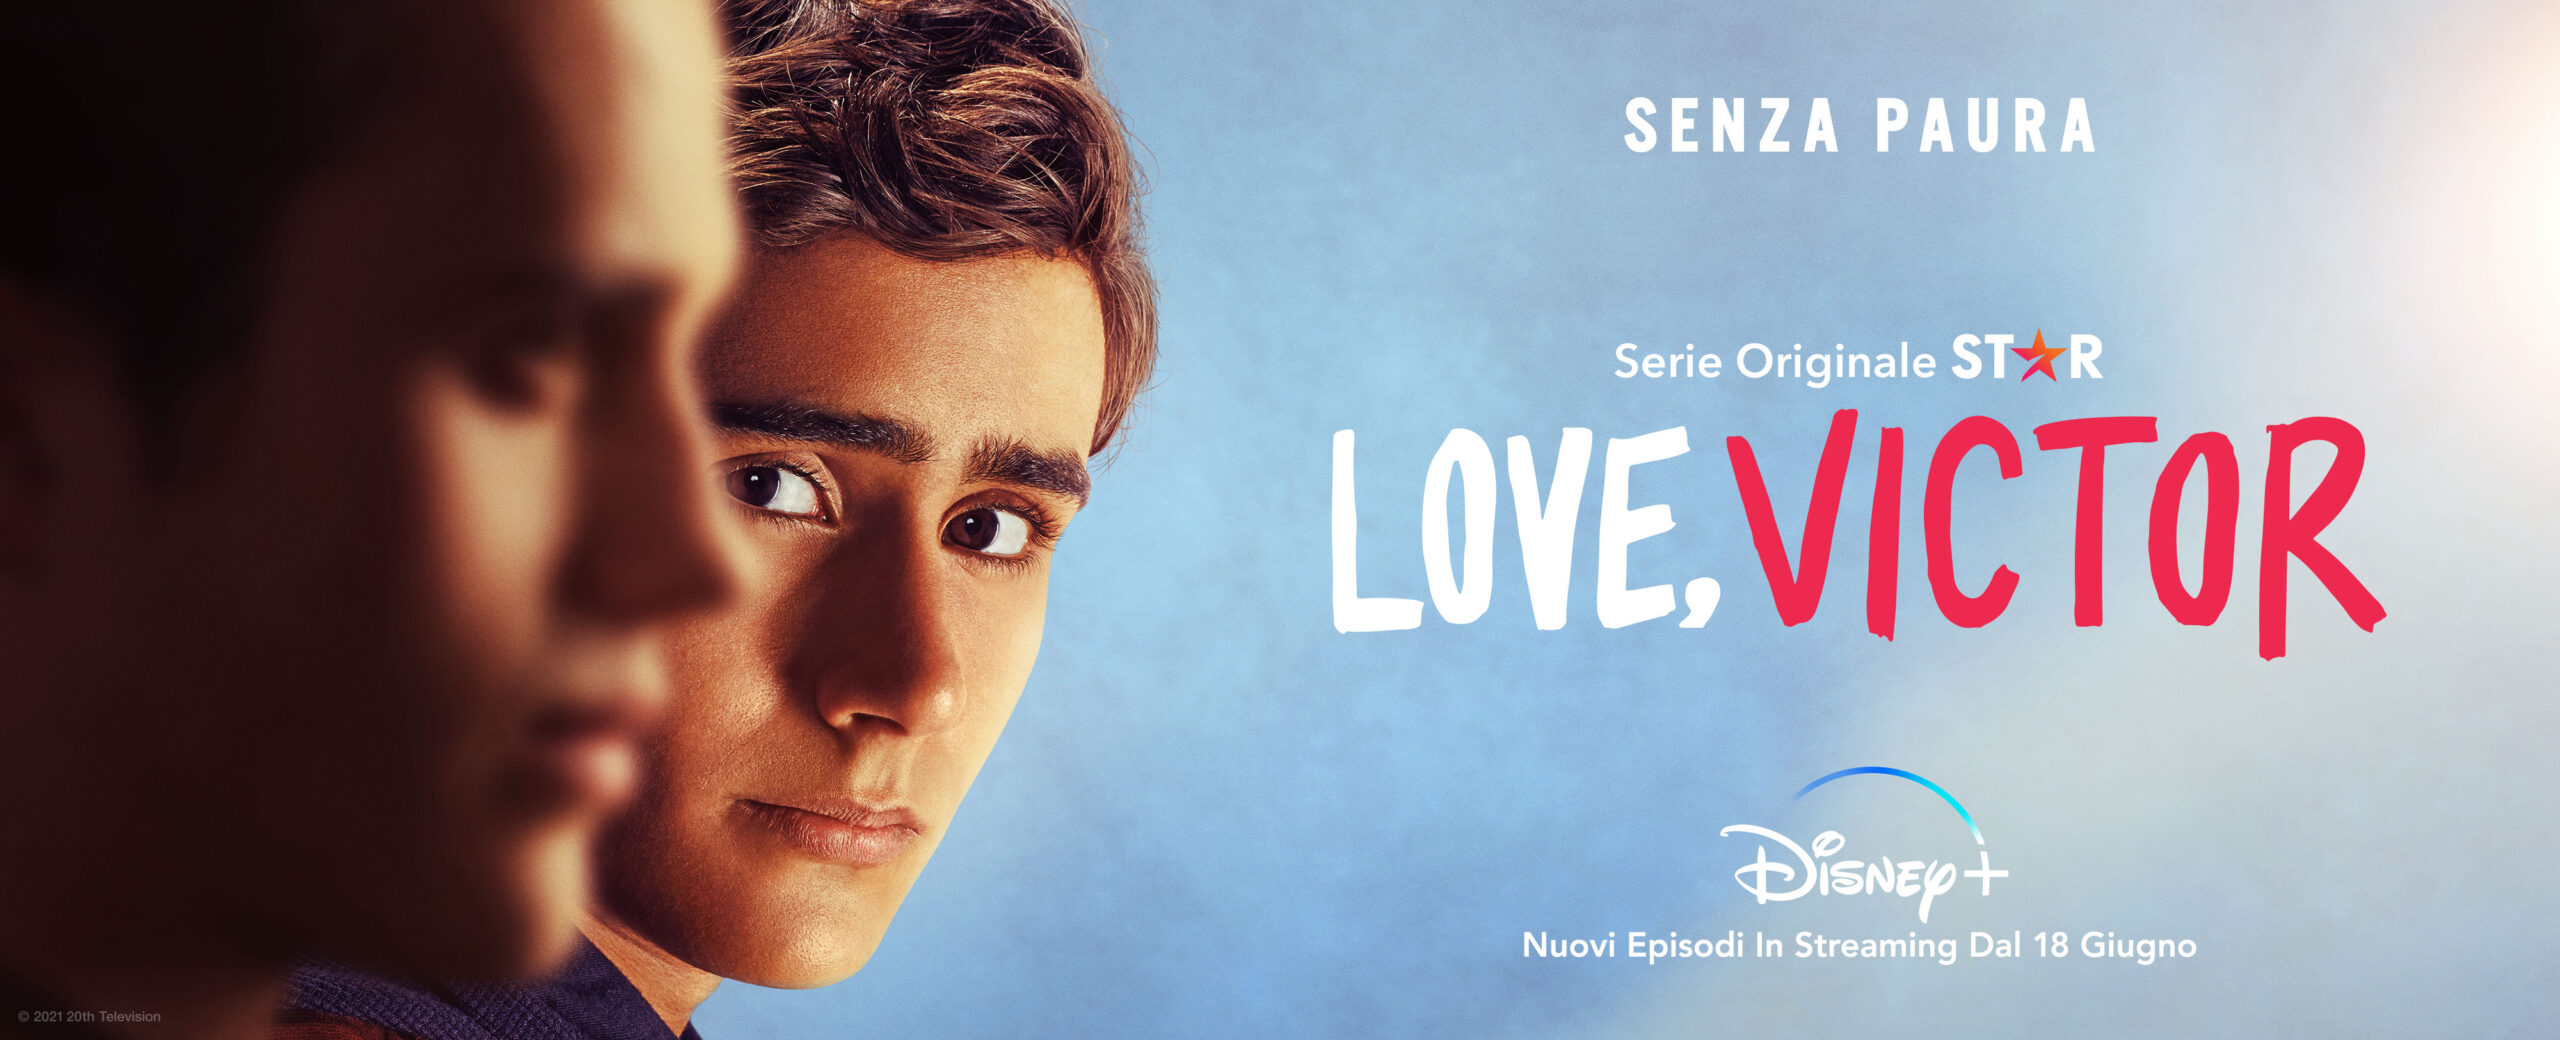 Poster Love, Victor (stagione 2) [credit: Copyright 2021 20th Television; courtesy of Disney Italia]